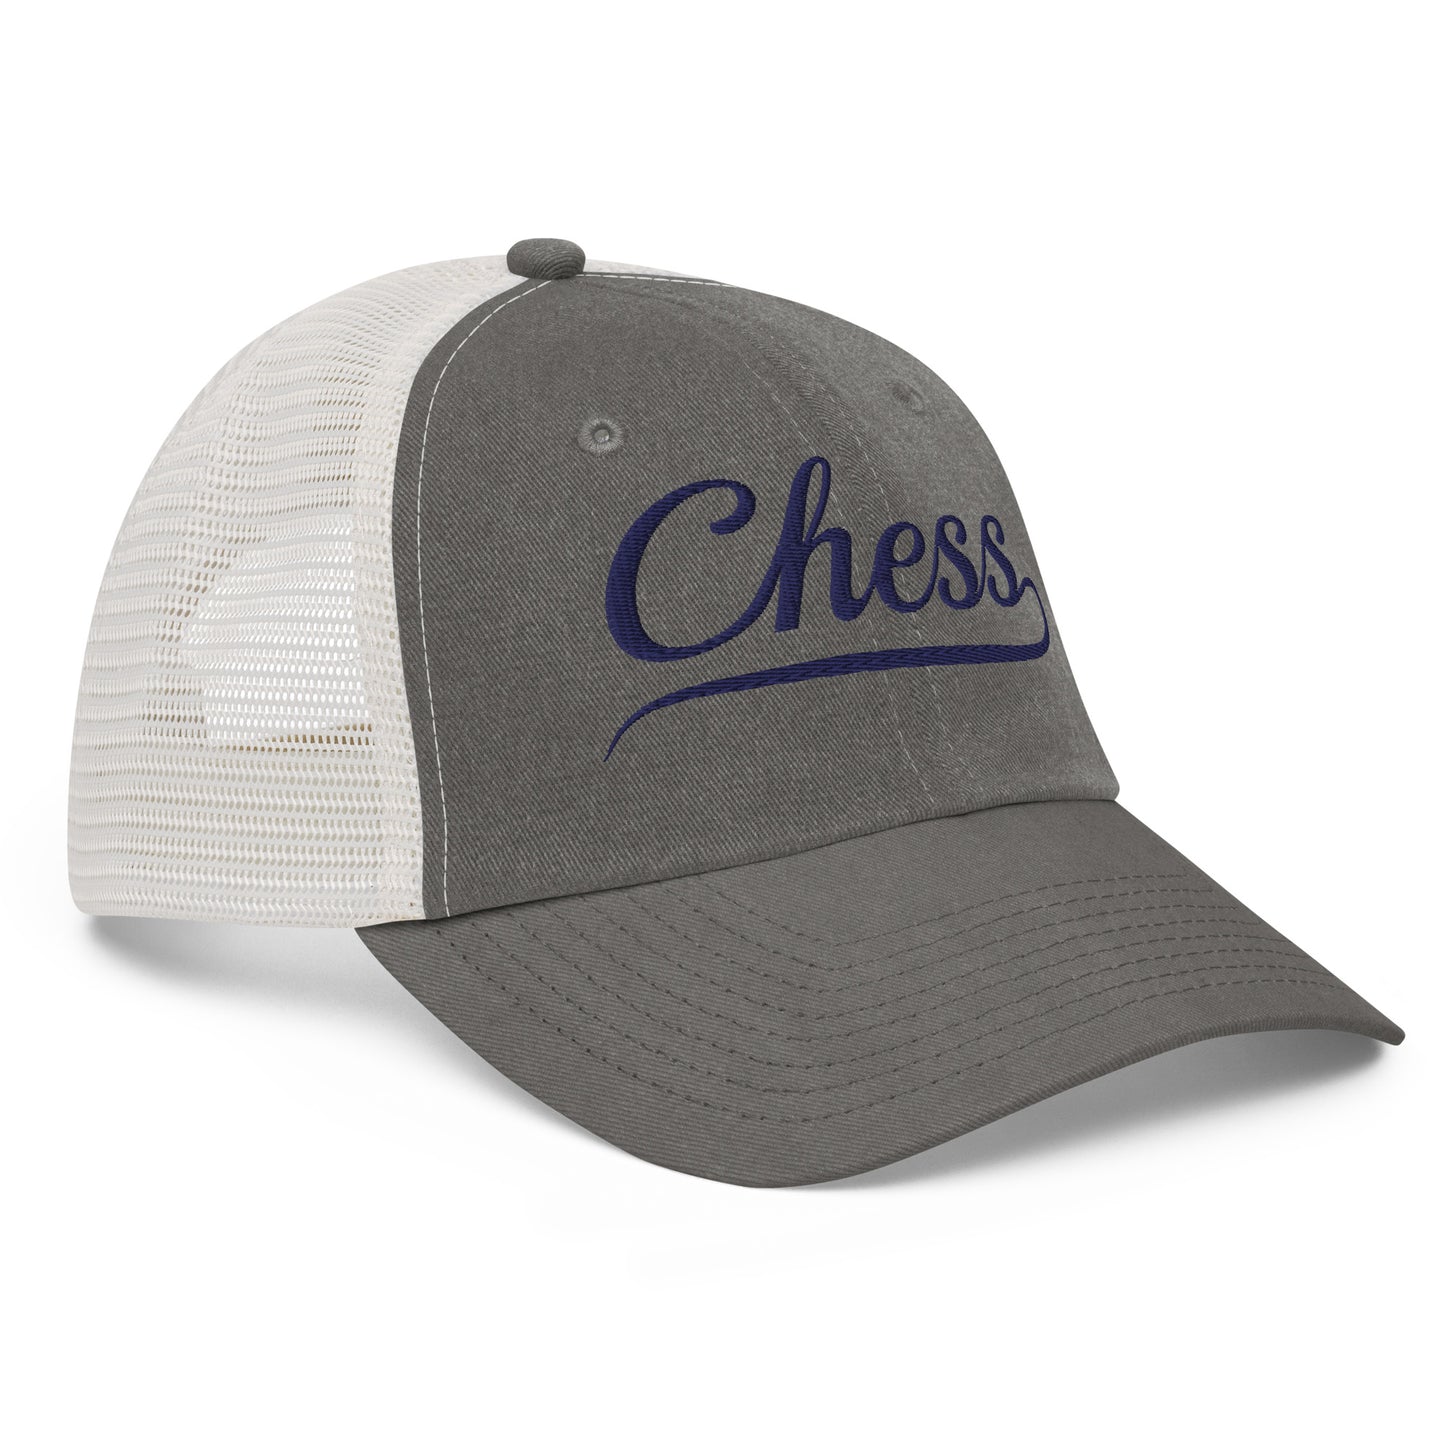 Chess Trucker Cap Grey